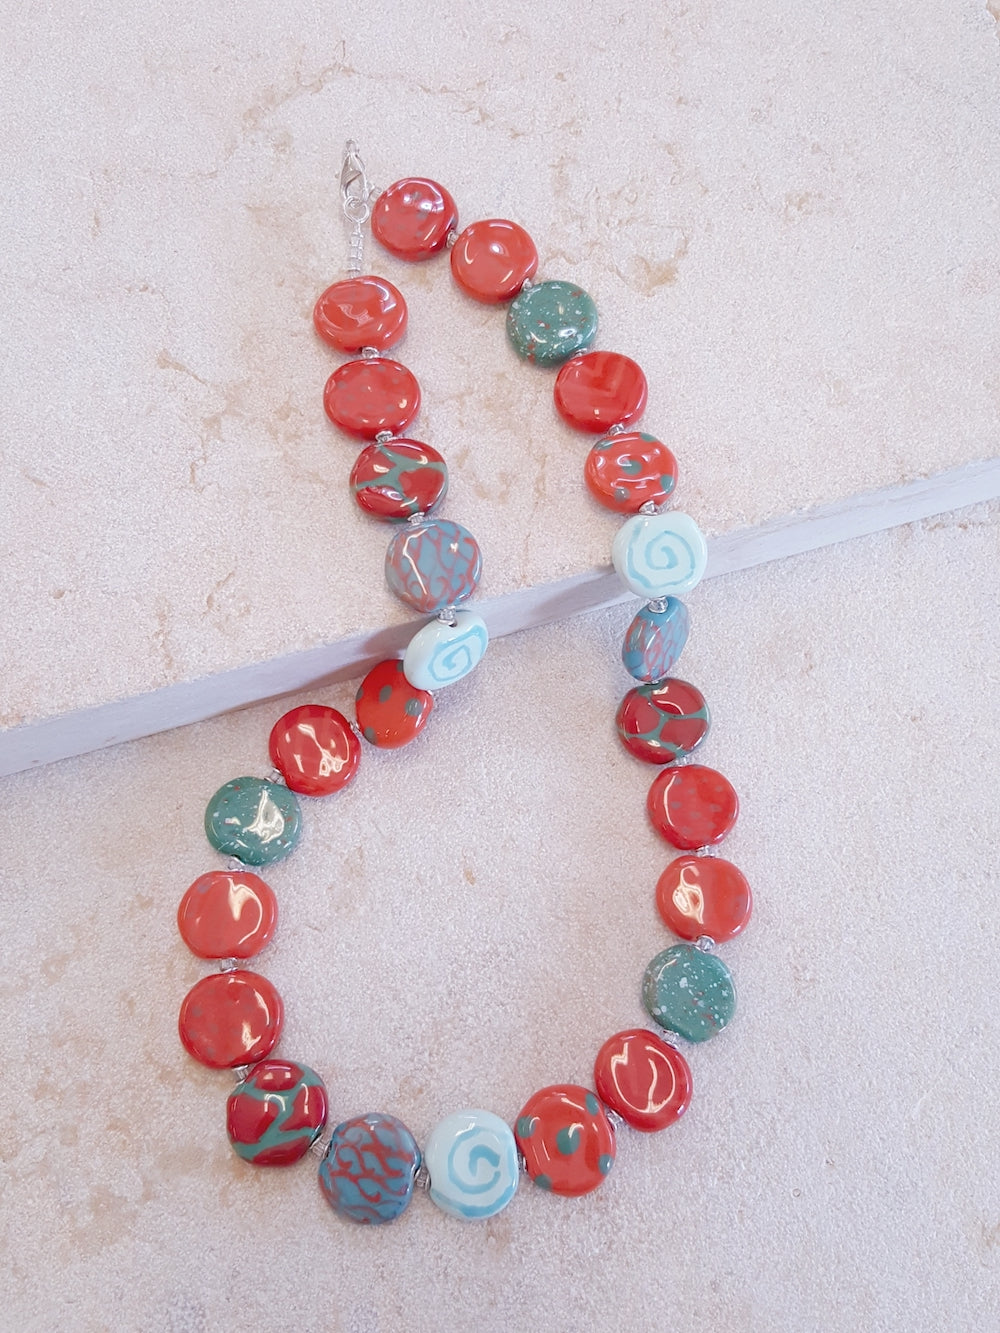 clay-beautiful-necklace-kenya-women-red-multi-coloured-beads-pattern-jewellery